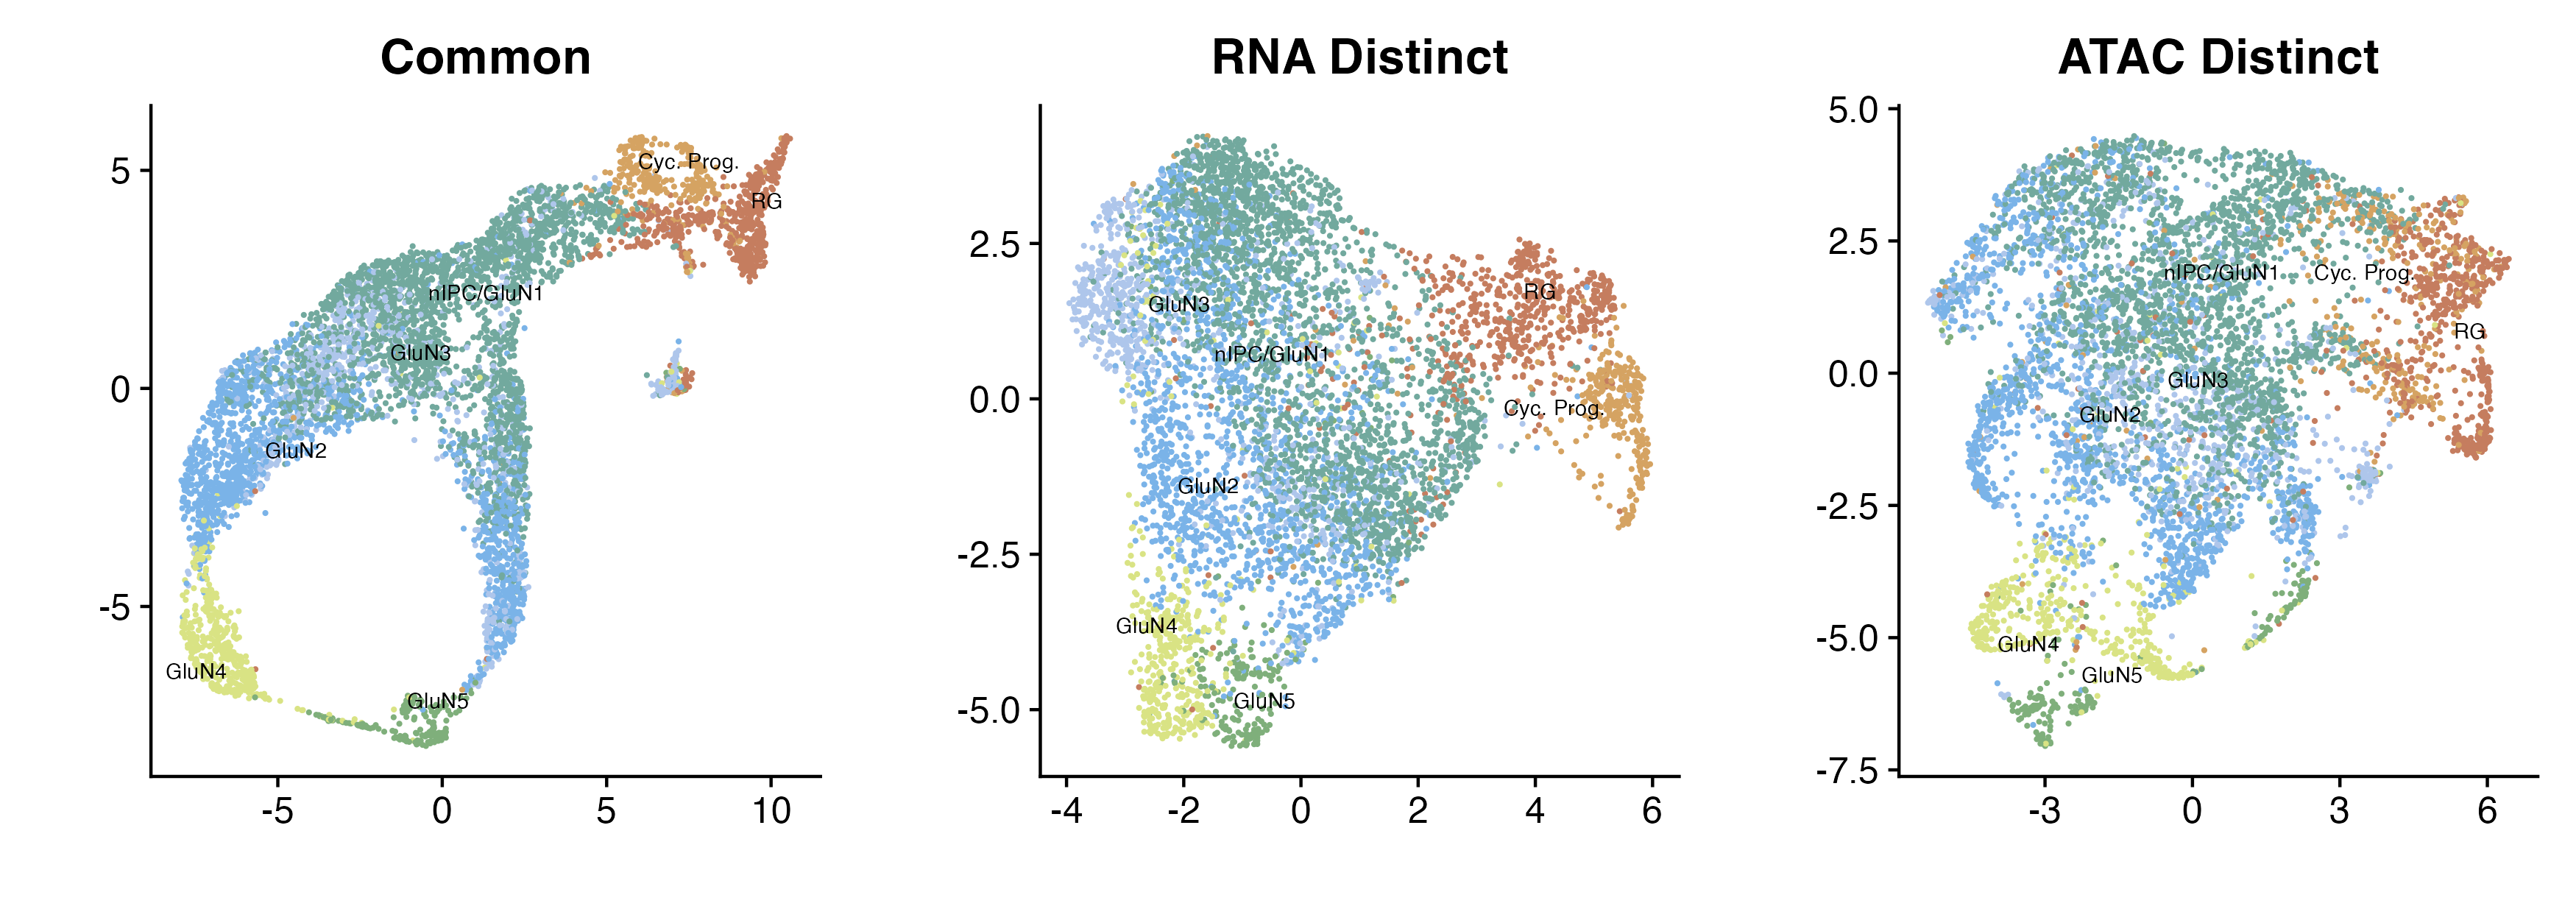 Common, RNA distinct, and ATAC distinct embeddings